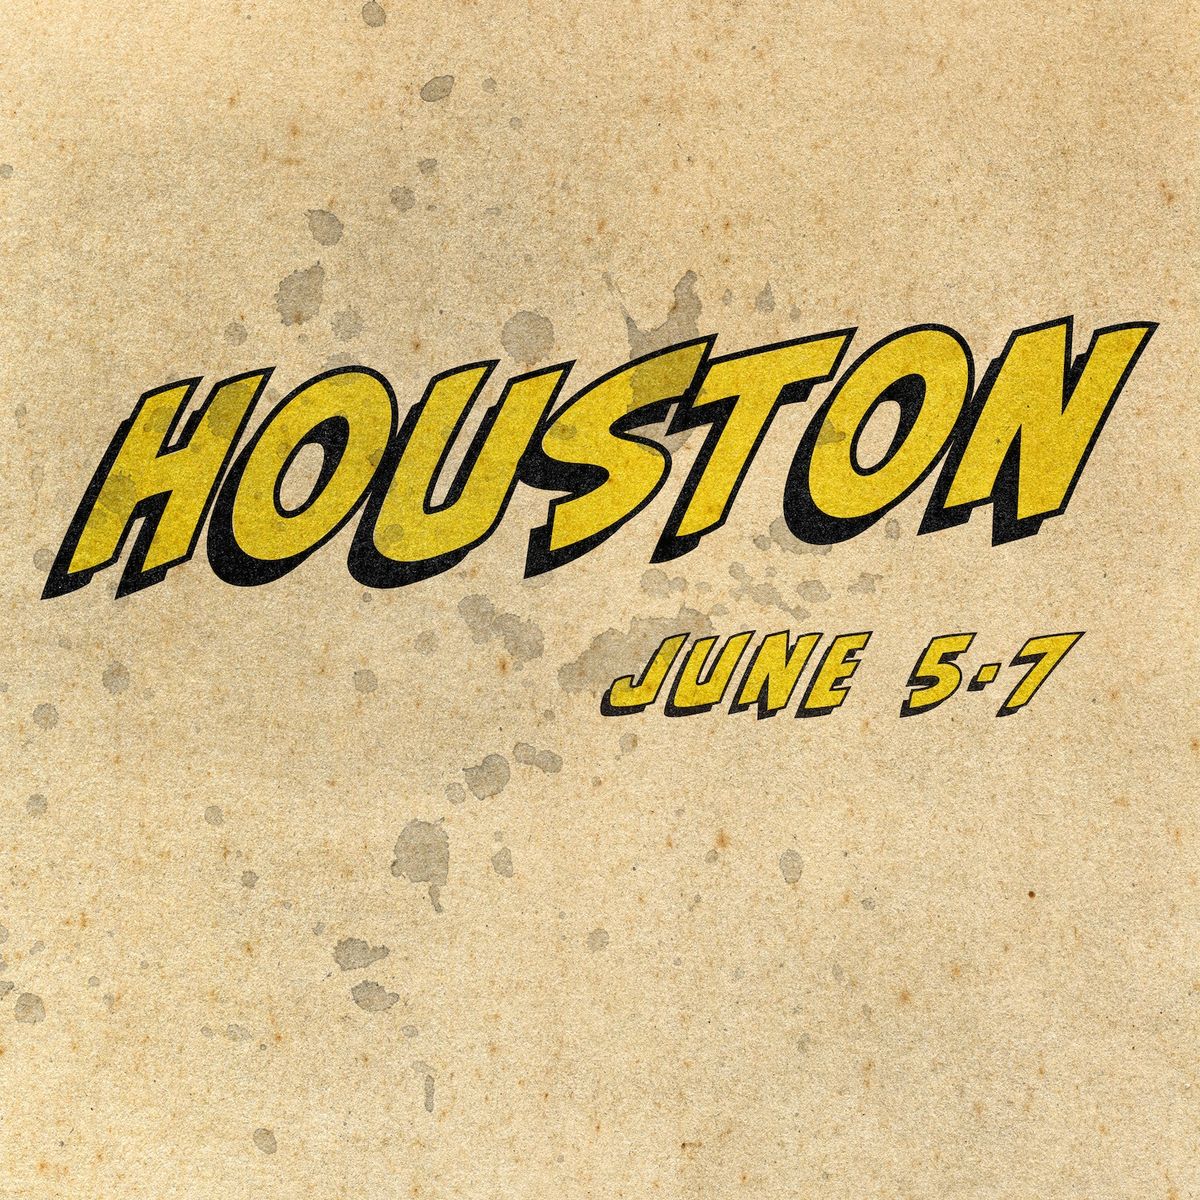 Powell Lacrosse Day Camp: Houston, TX